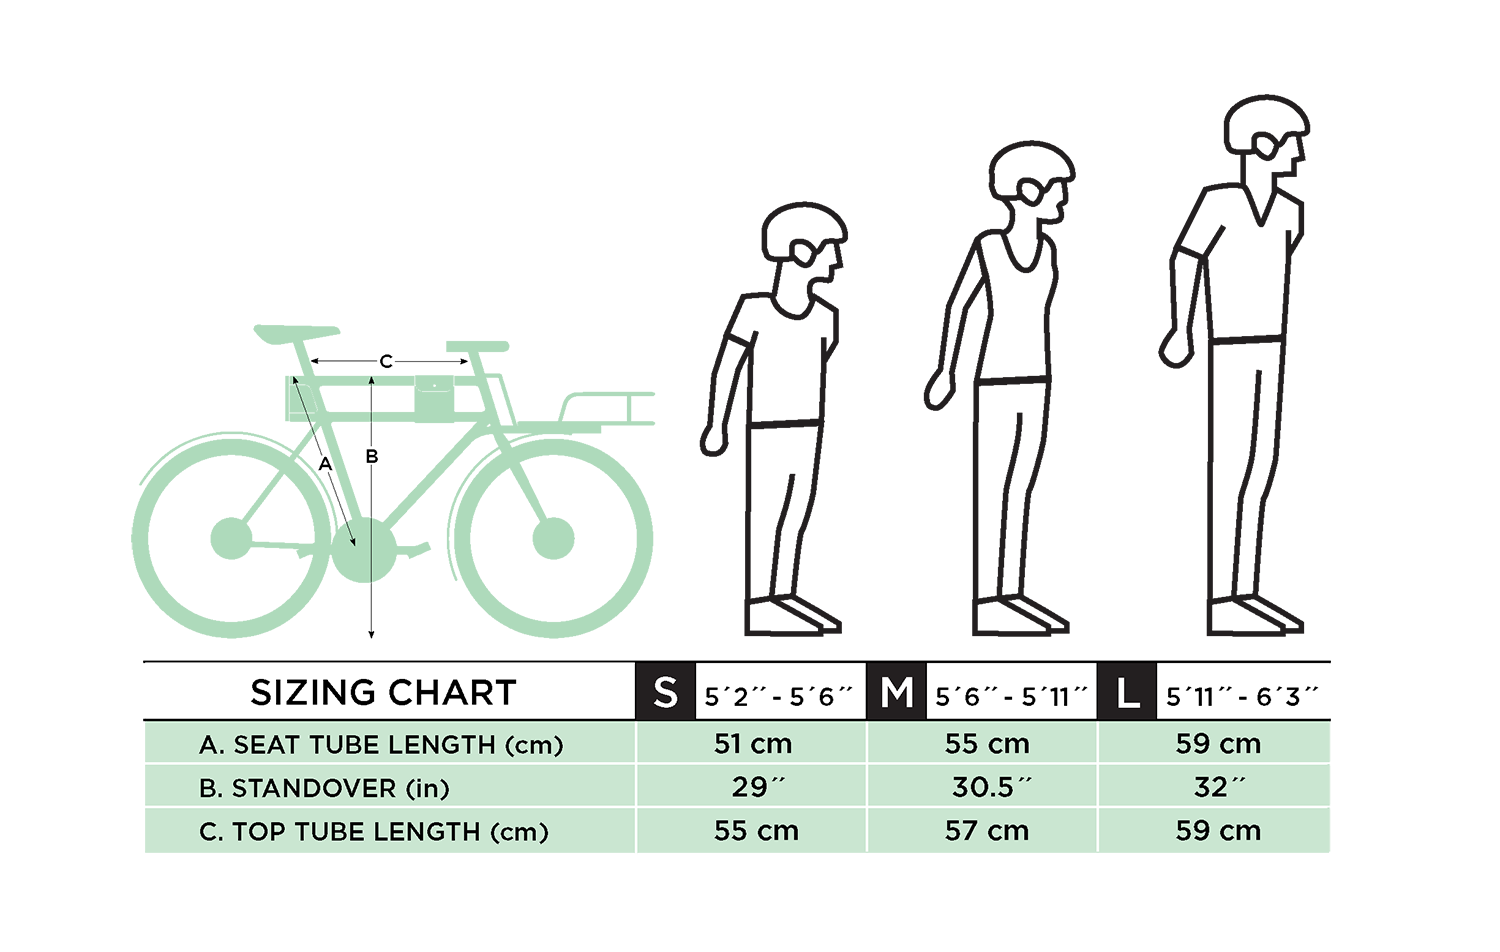 Какая рама нужна рост. Ростовка рамы велосипеда по росту таблица. Размер горного велосипеда по росту таблица для женщин. Размер рамы велосипеда по росту таблица для детей. Рамы велосипедов по росту таблица.